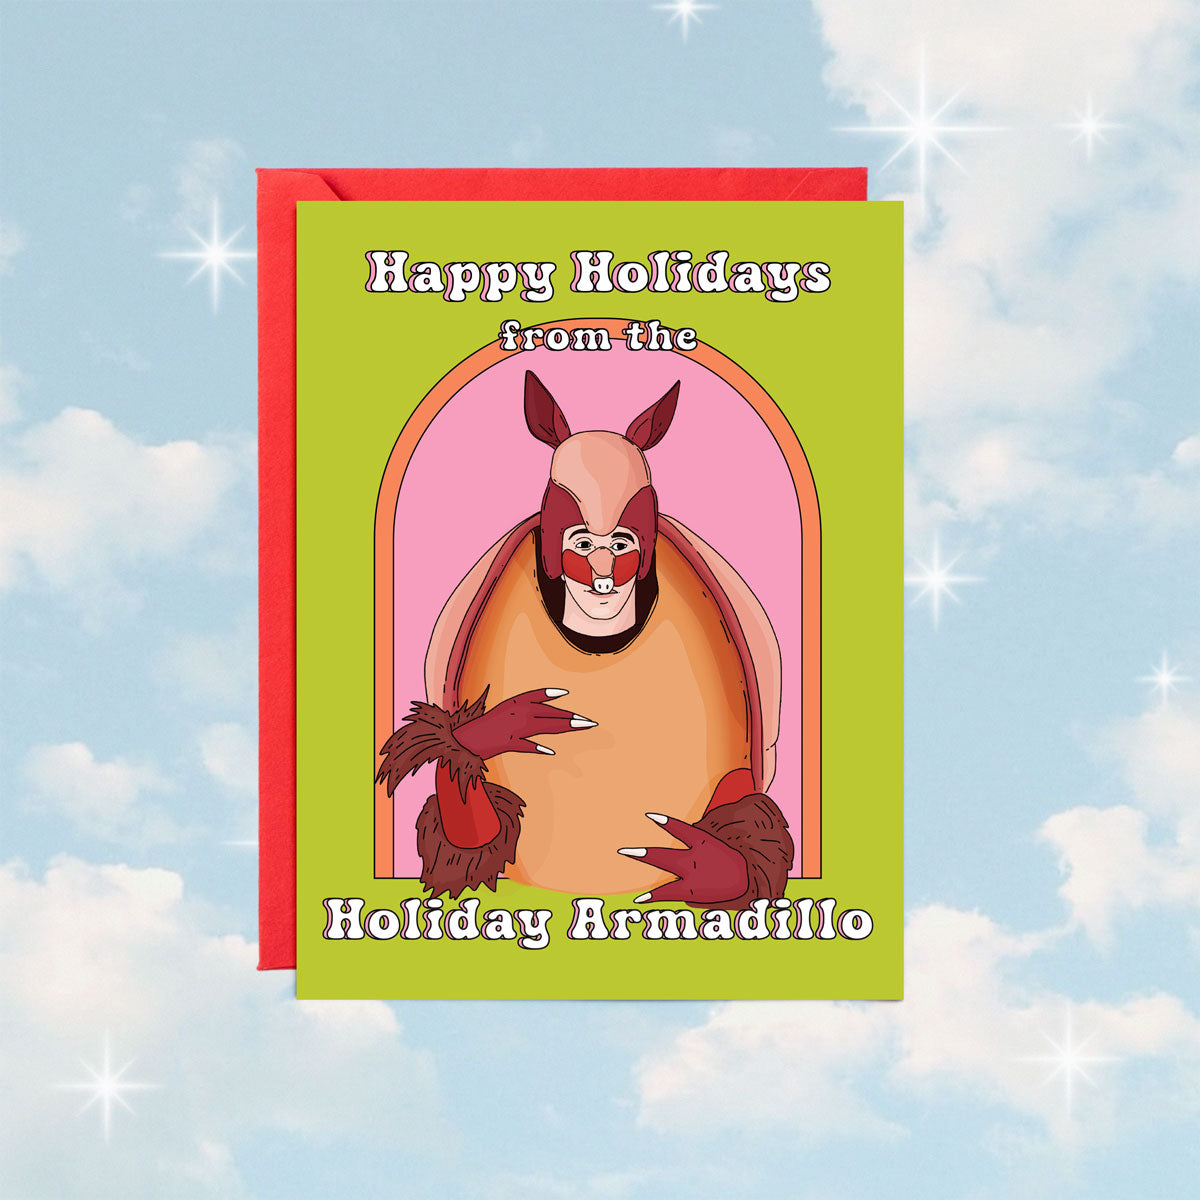 Holiday Armadillo Card